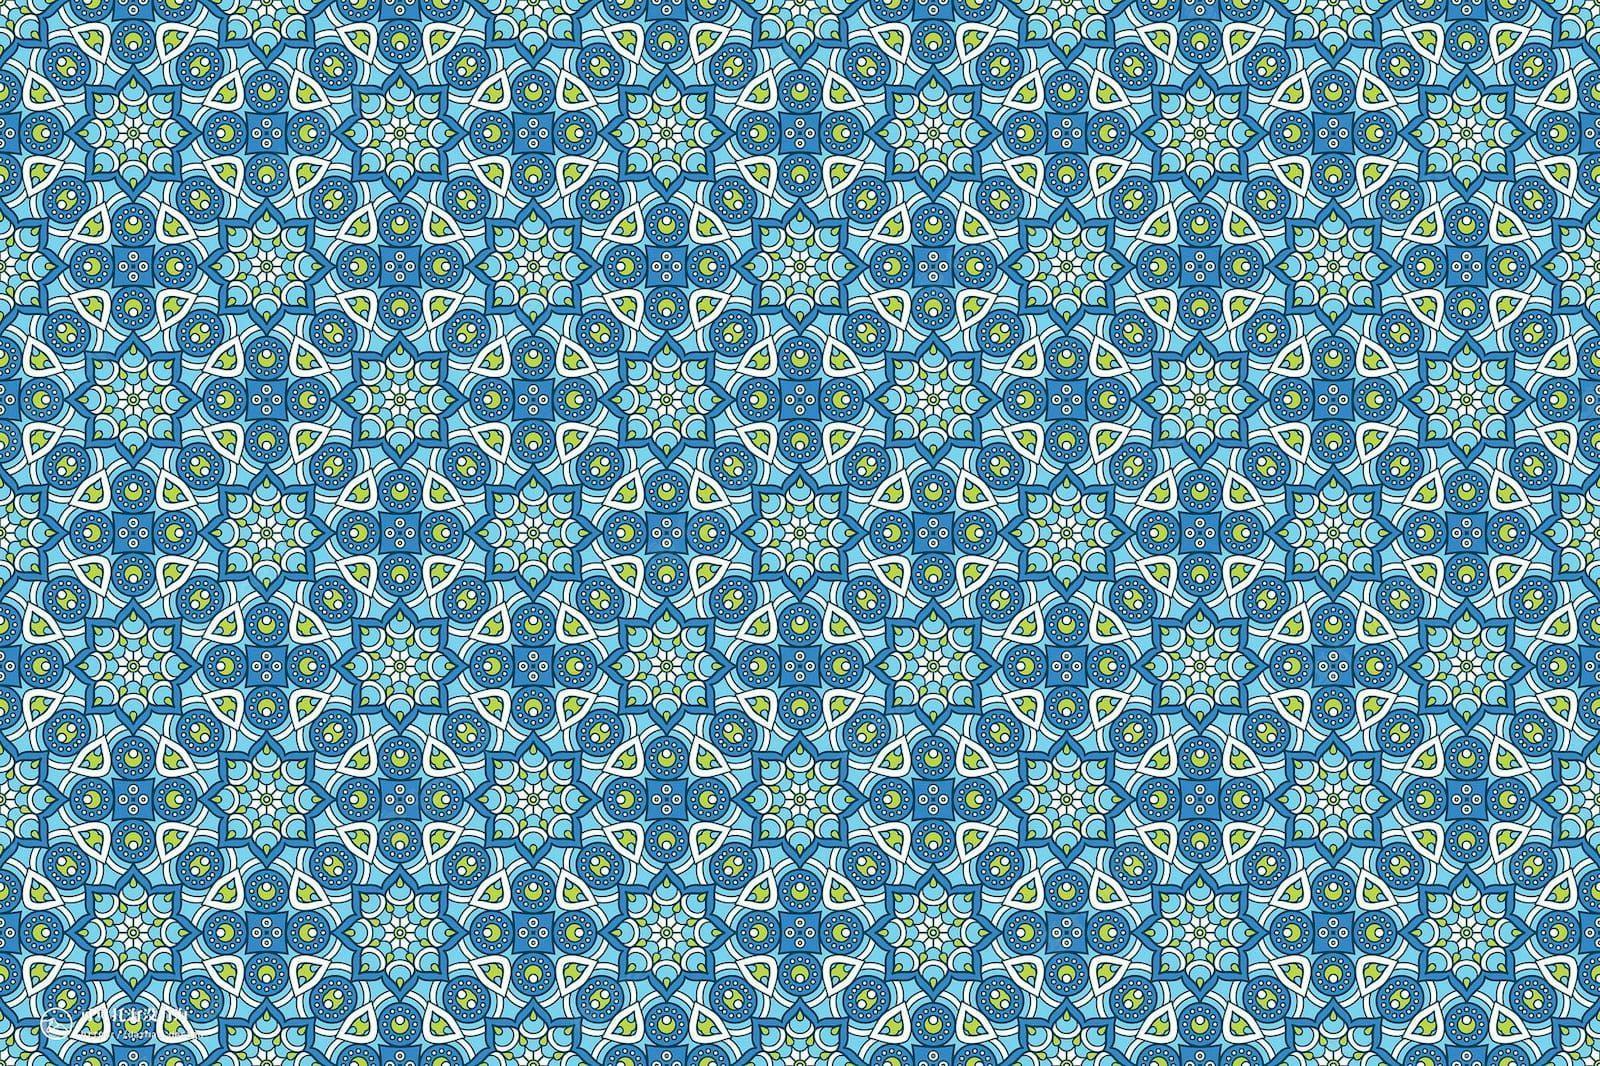 https://darmau-image-1256887306.cos.ap-hongkong.myqcloud.com/islamic_geometric_1_f8cc7f48df.jpeg